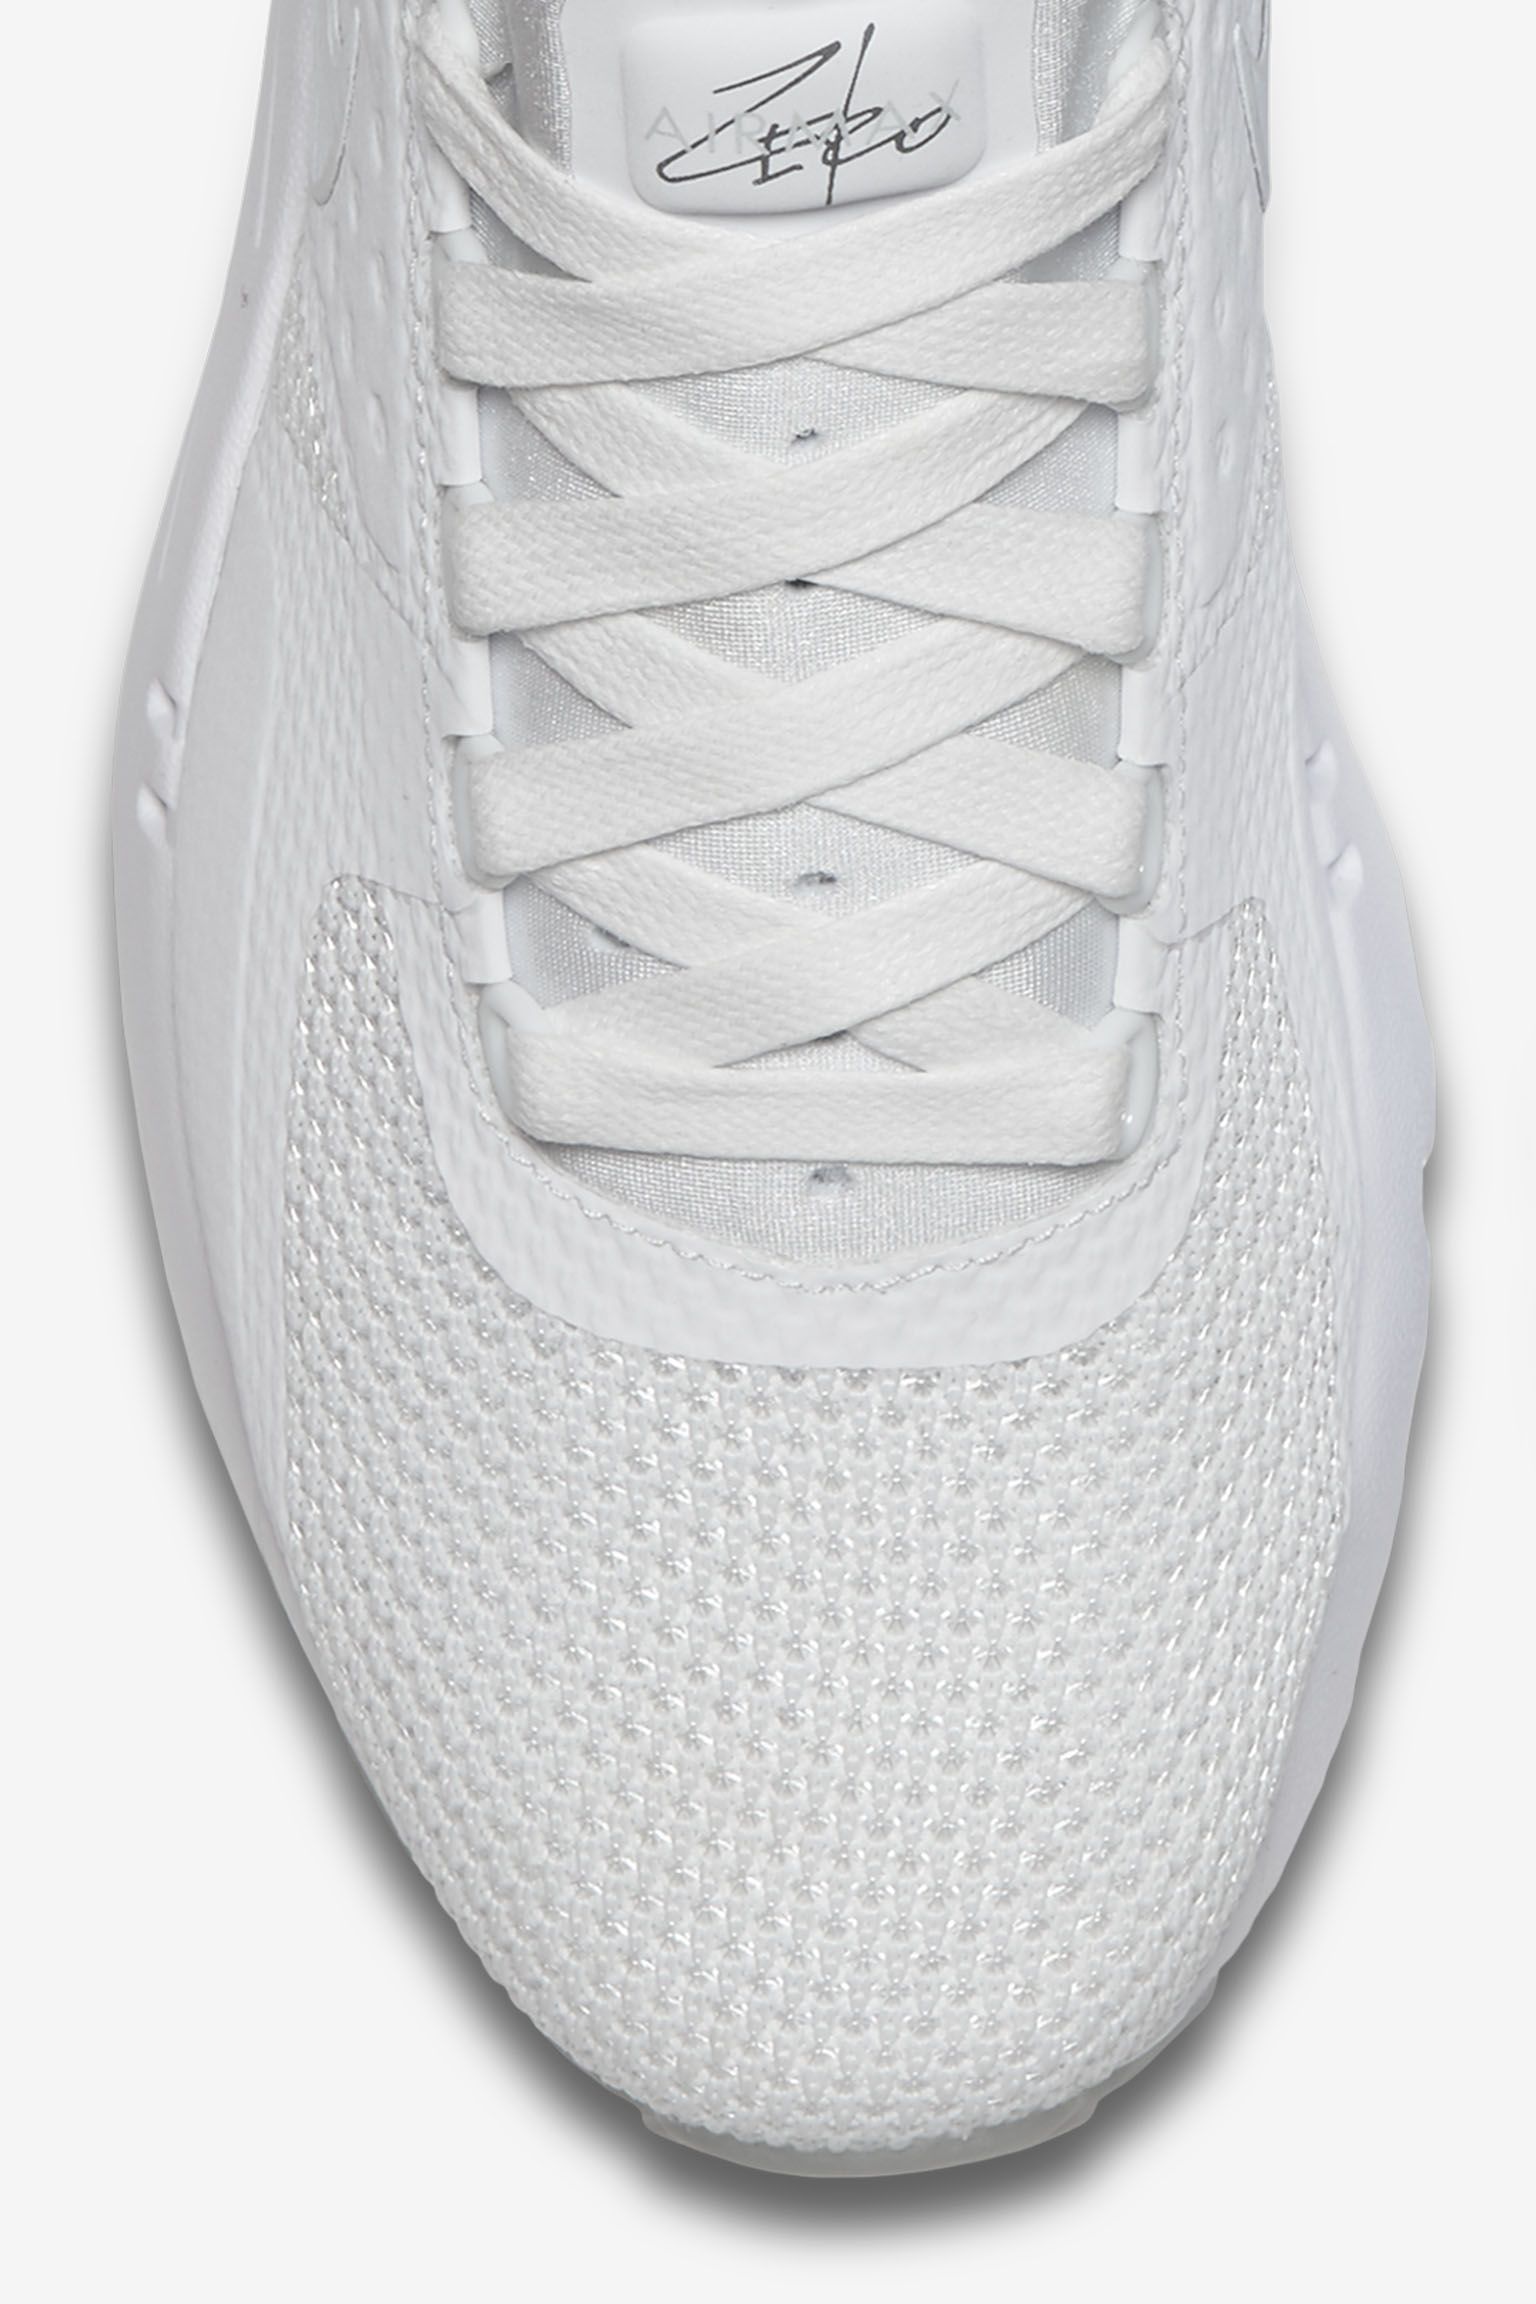 Nike Max Zero 'Triple White' Release Date. Nike SNKRS